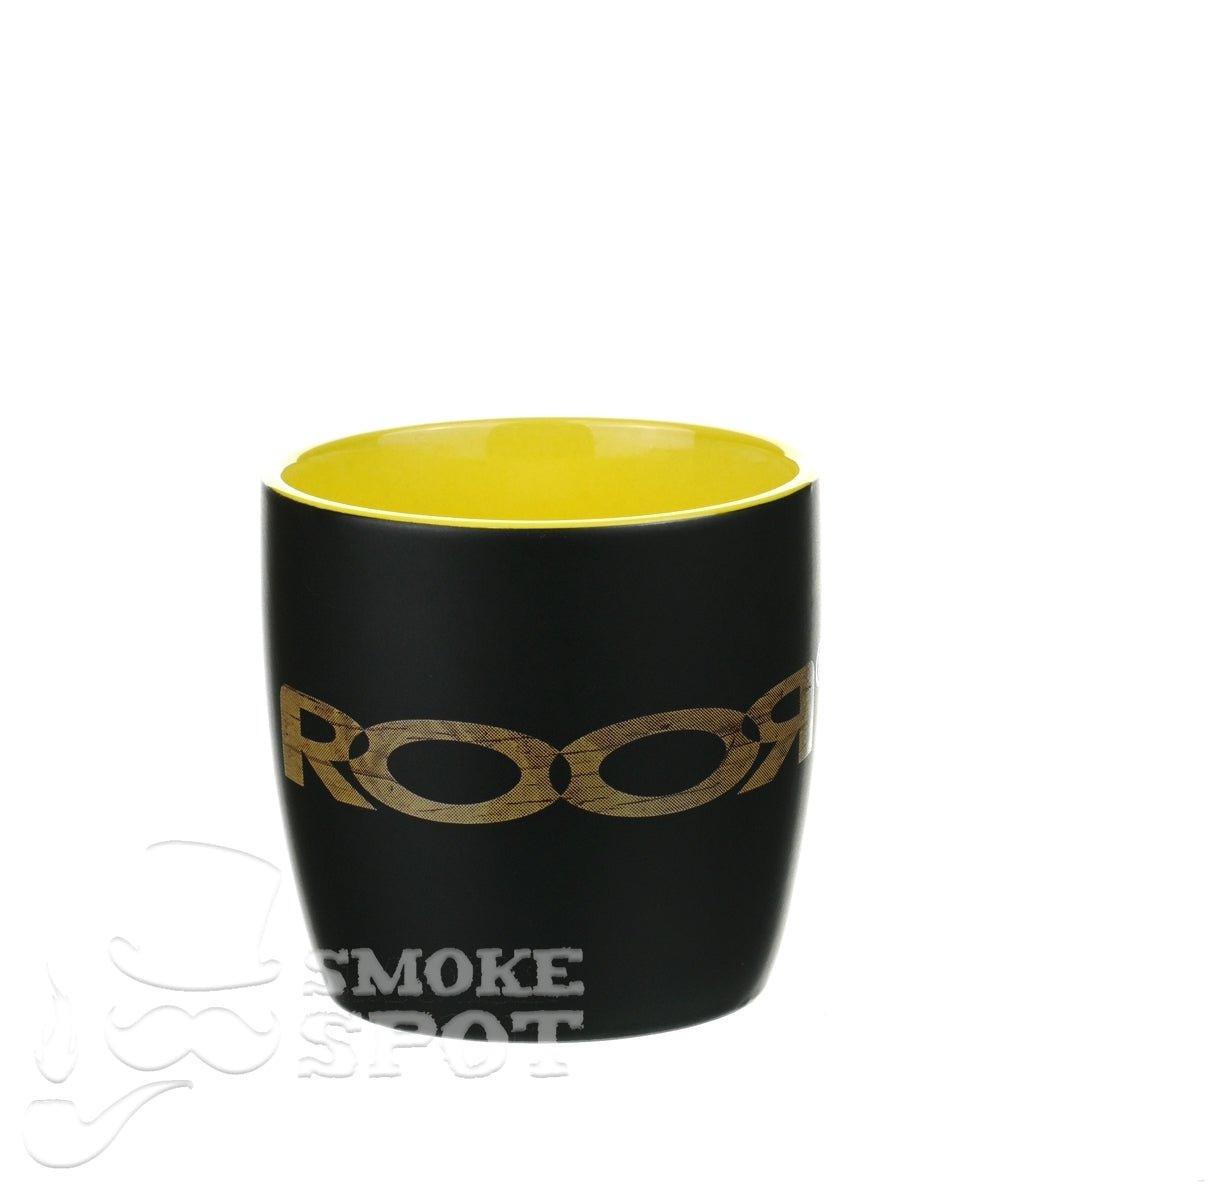 ROOR mug wood grain yellow inside - Smoke Spot Smoke Shop